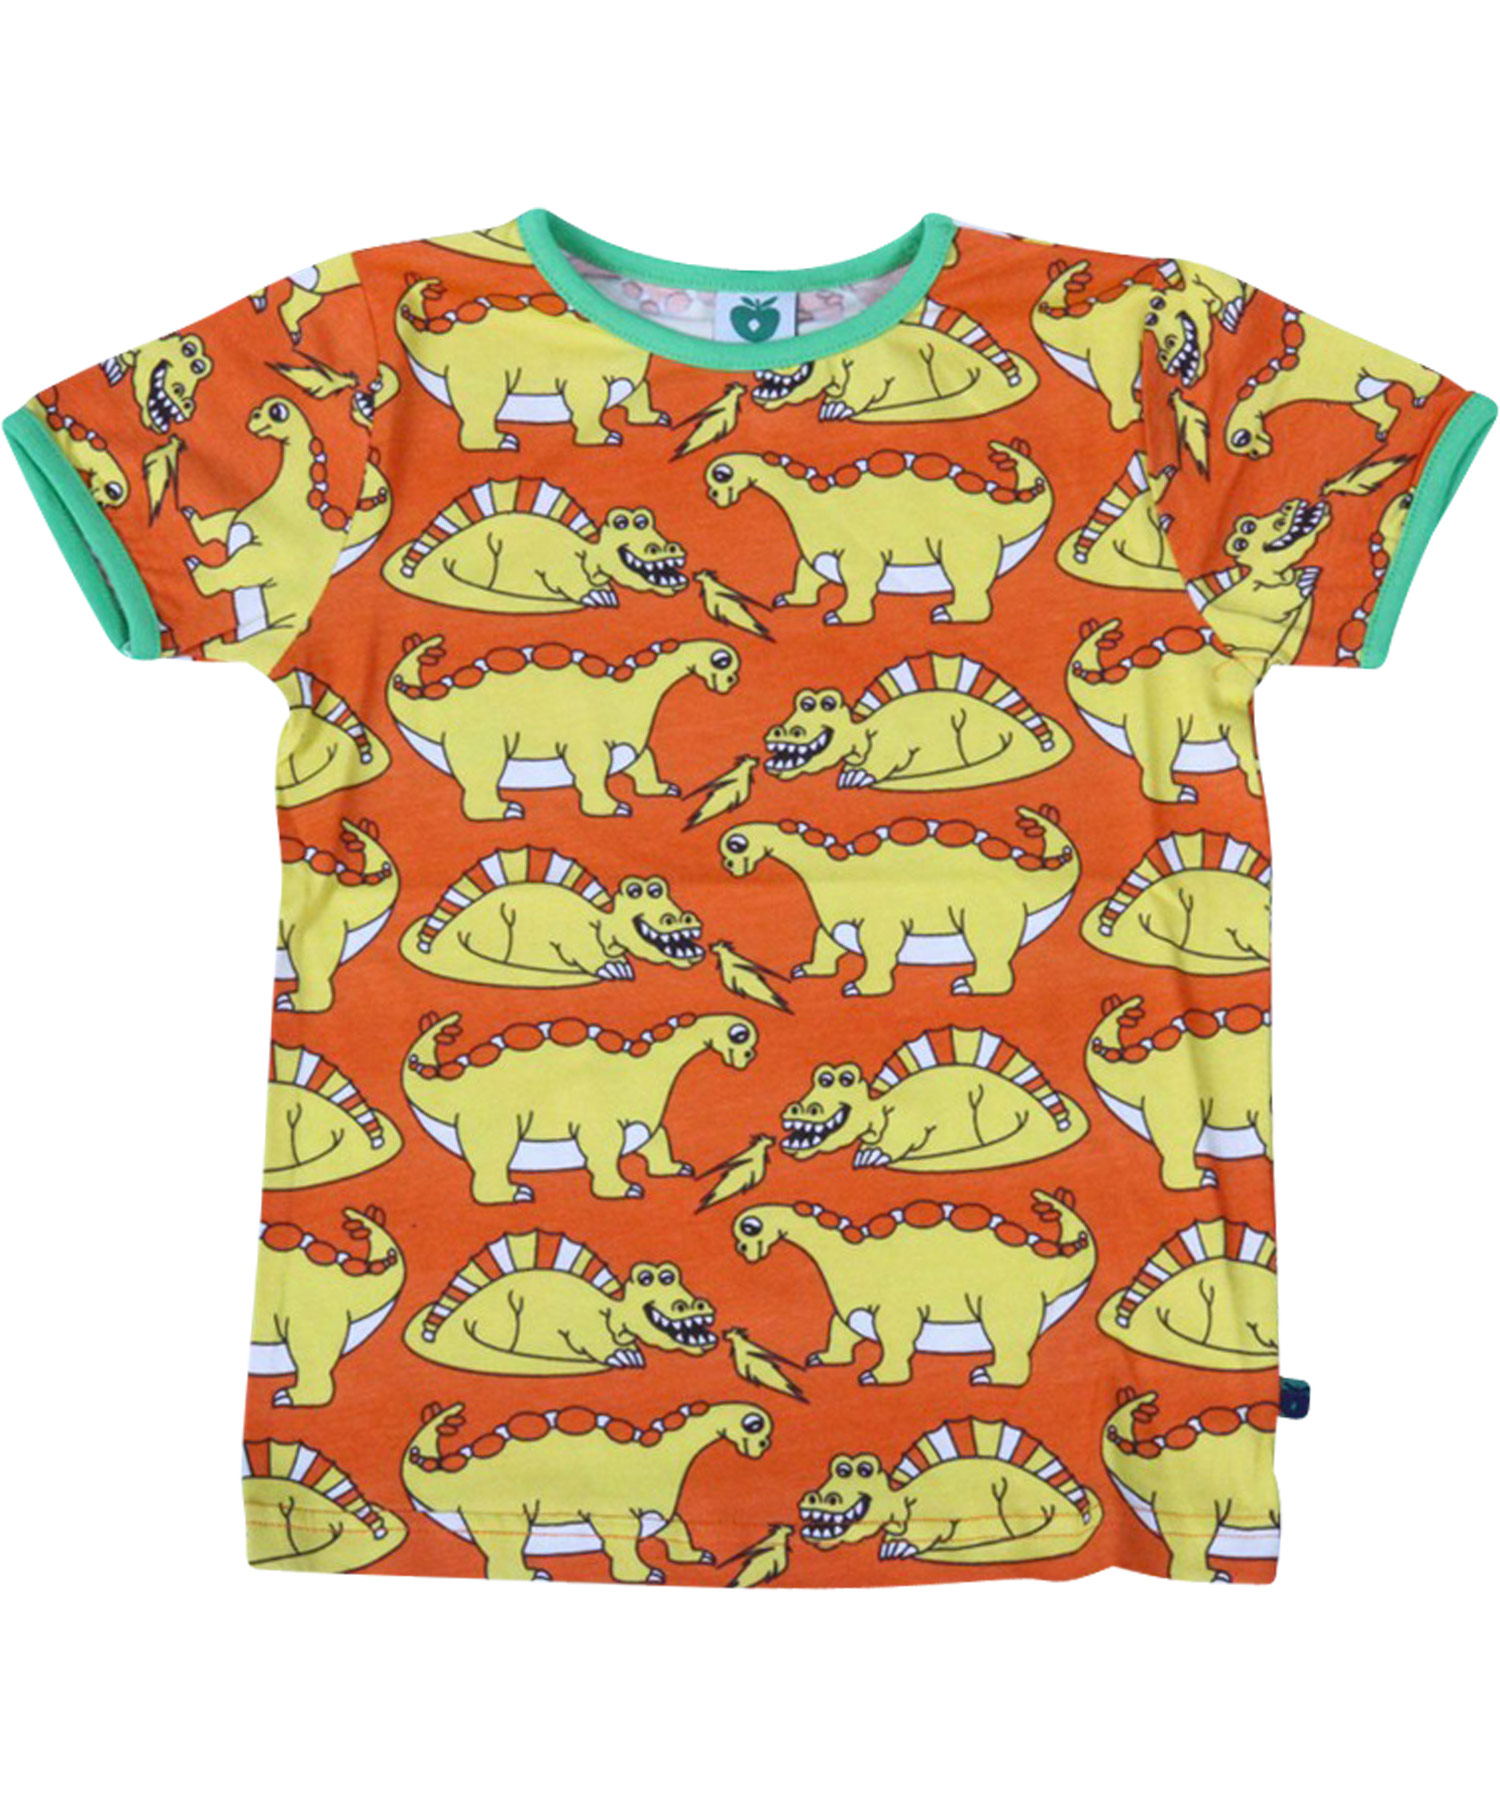 New! Smafolk adorable orange T-shirt with yellow dinosaurs (Dinausors)